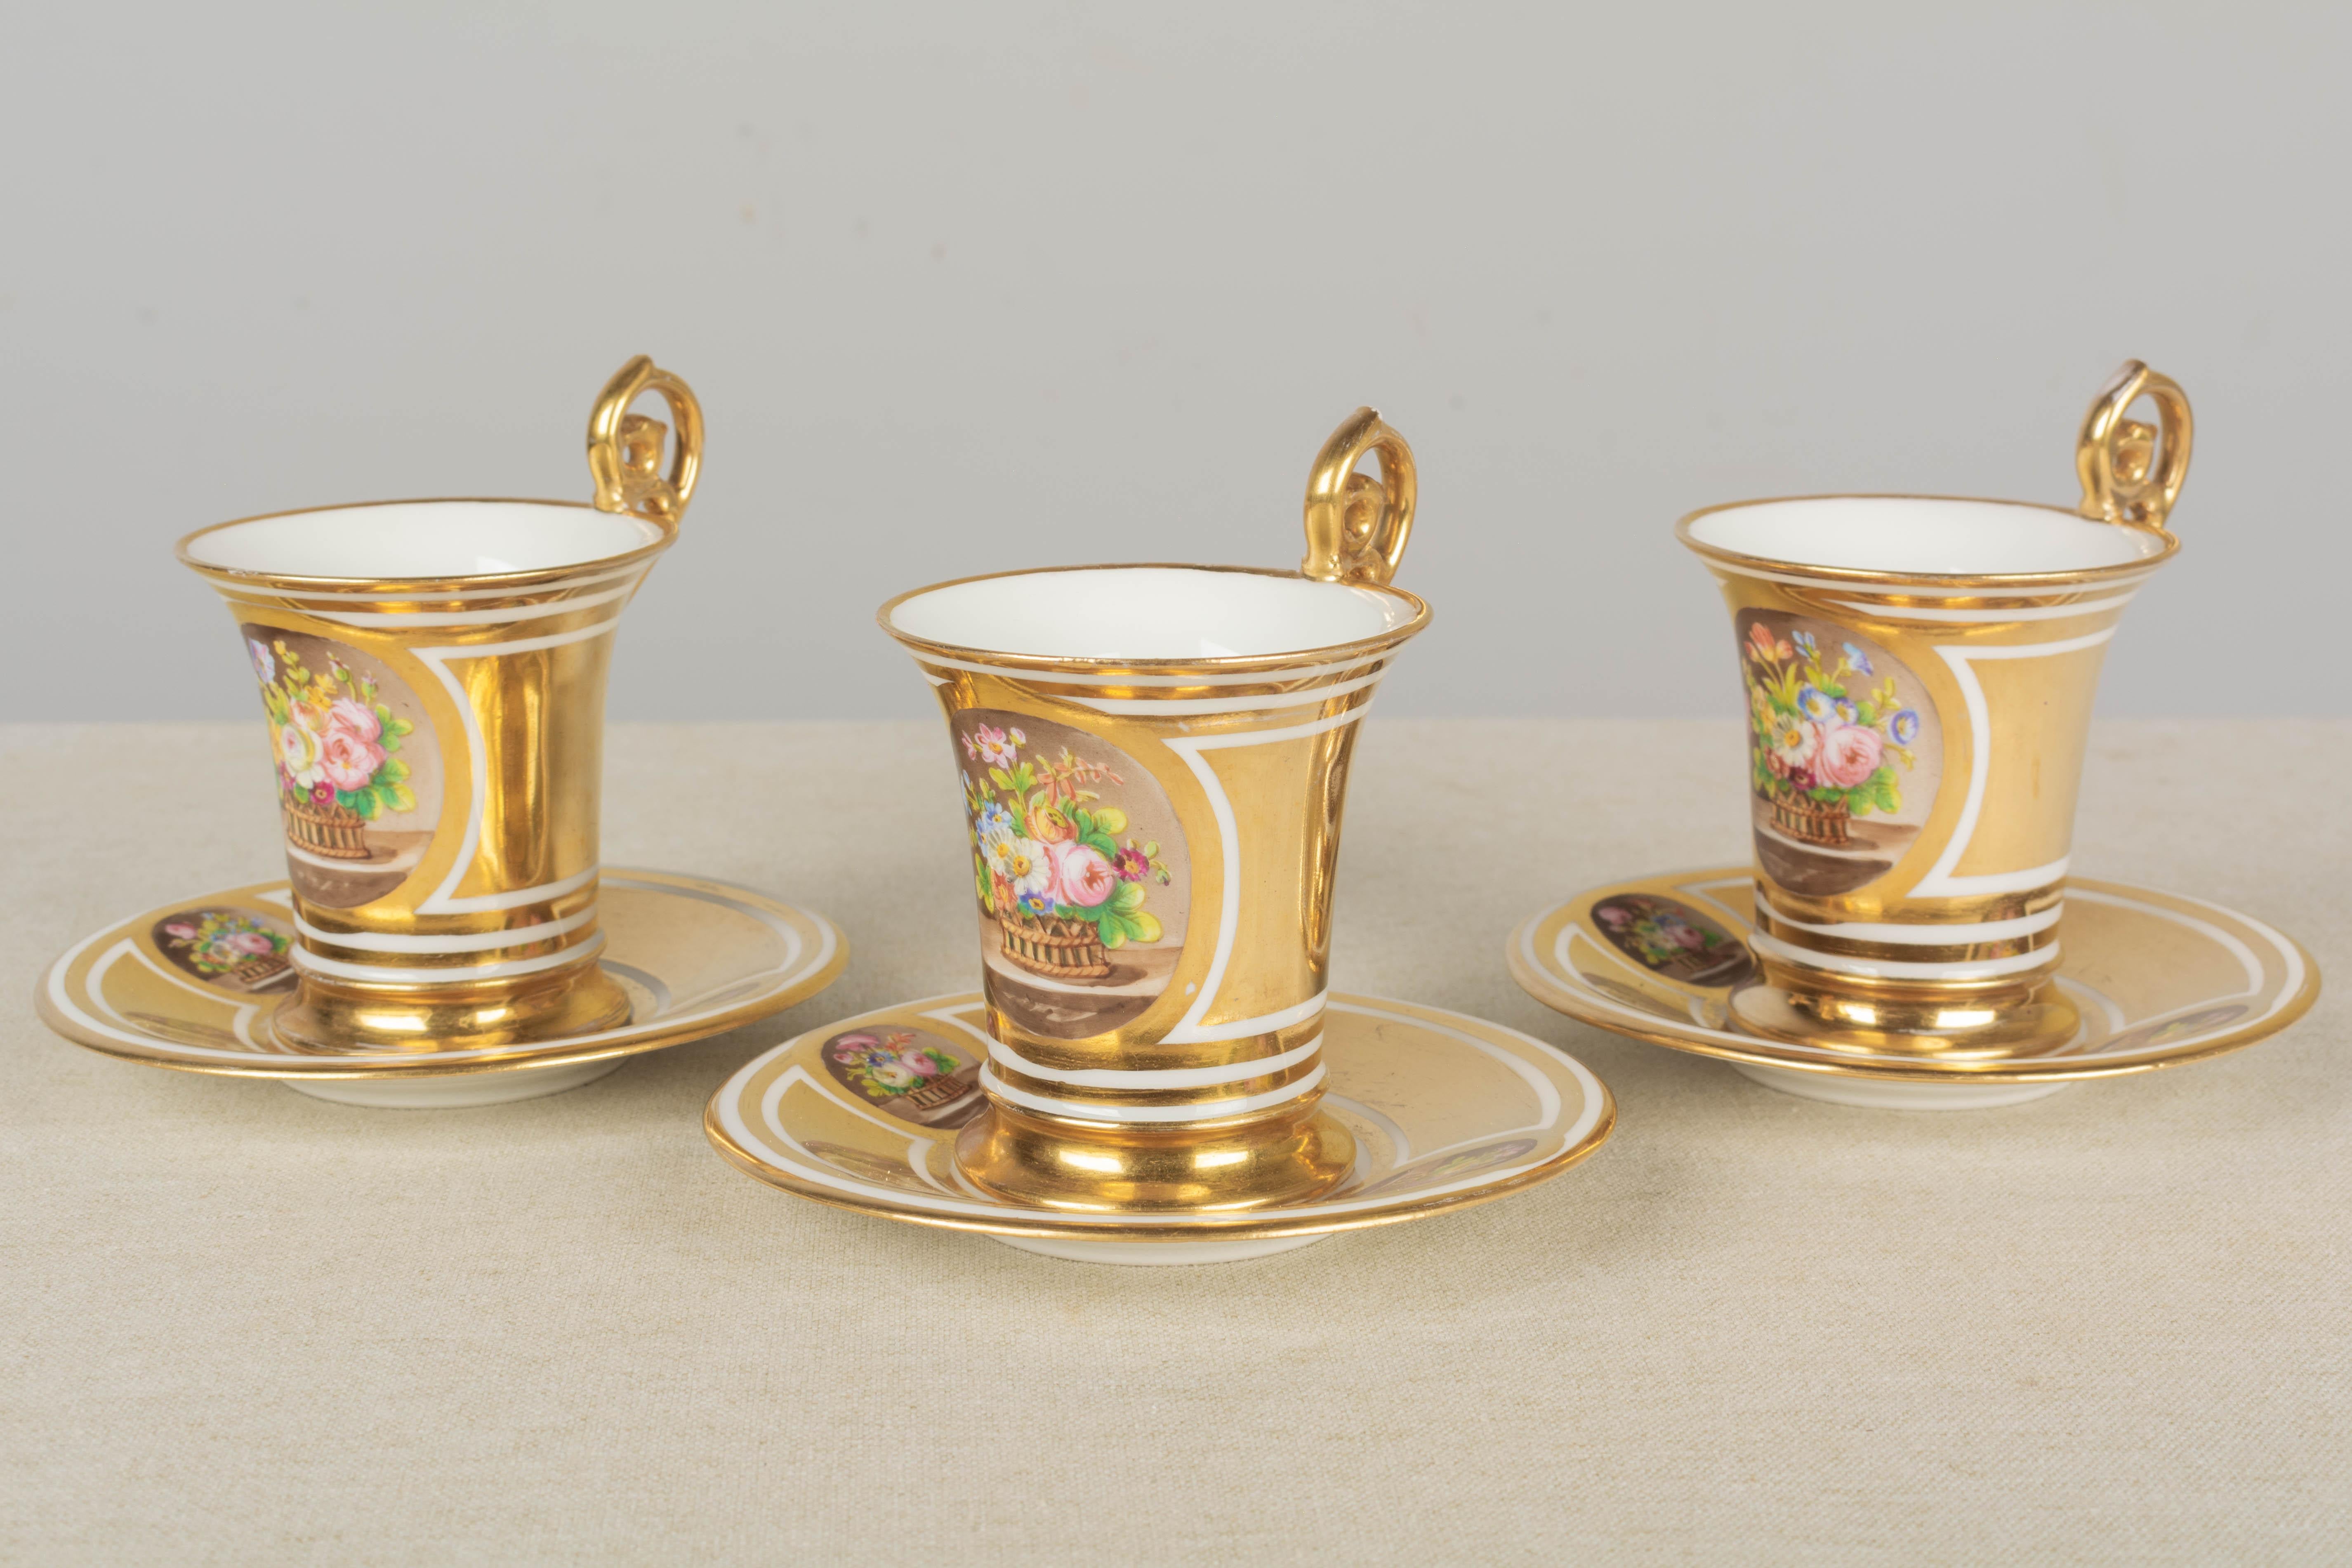 Beaux Arts 19th Century French Sèvres Gilt Porcelain Cup & Saucer, Set of 3 For Sale